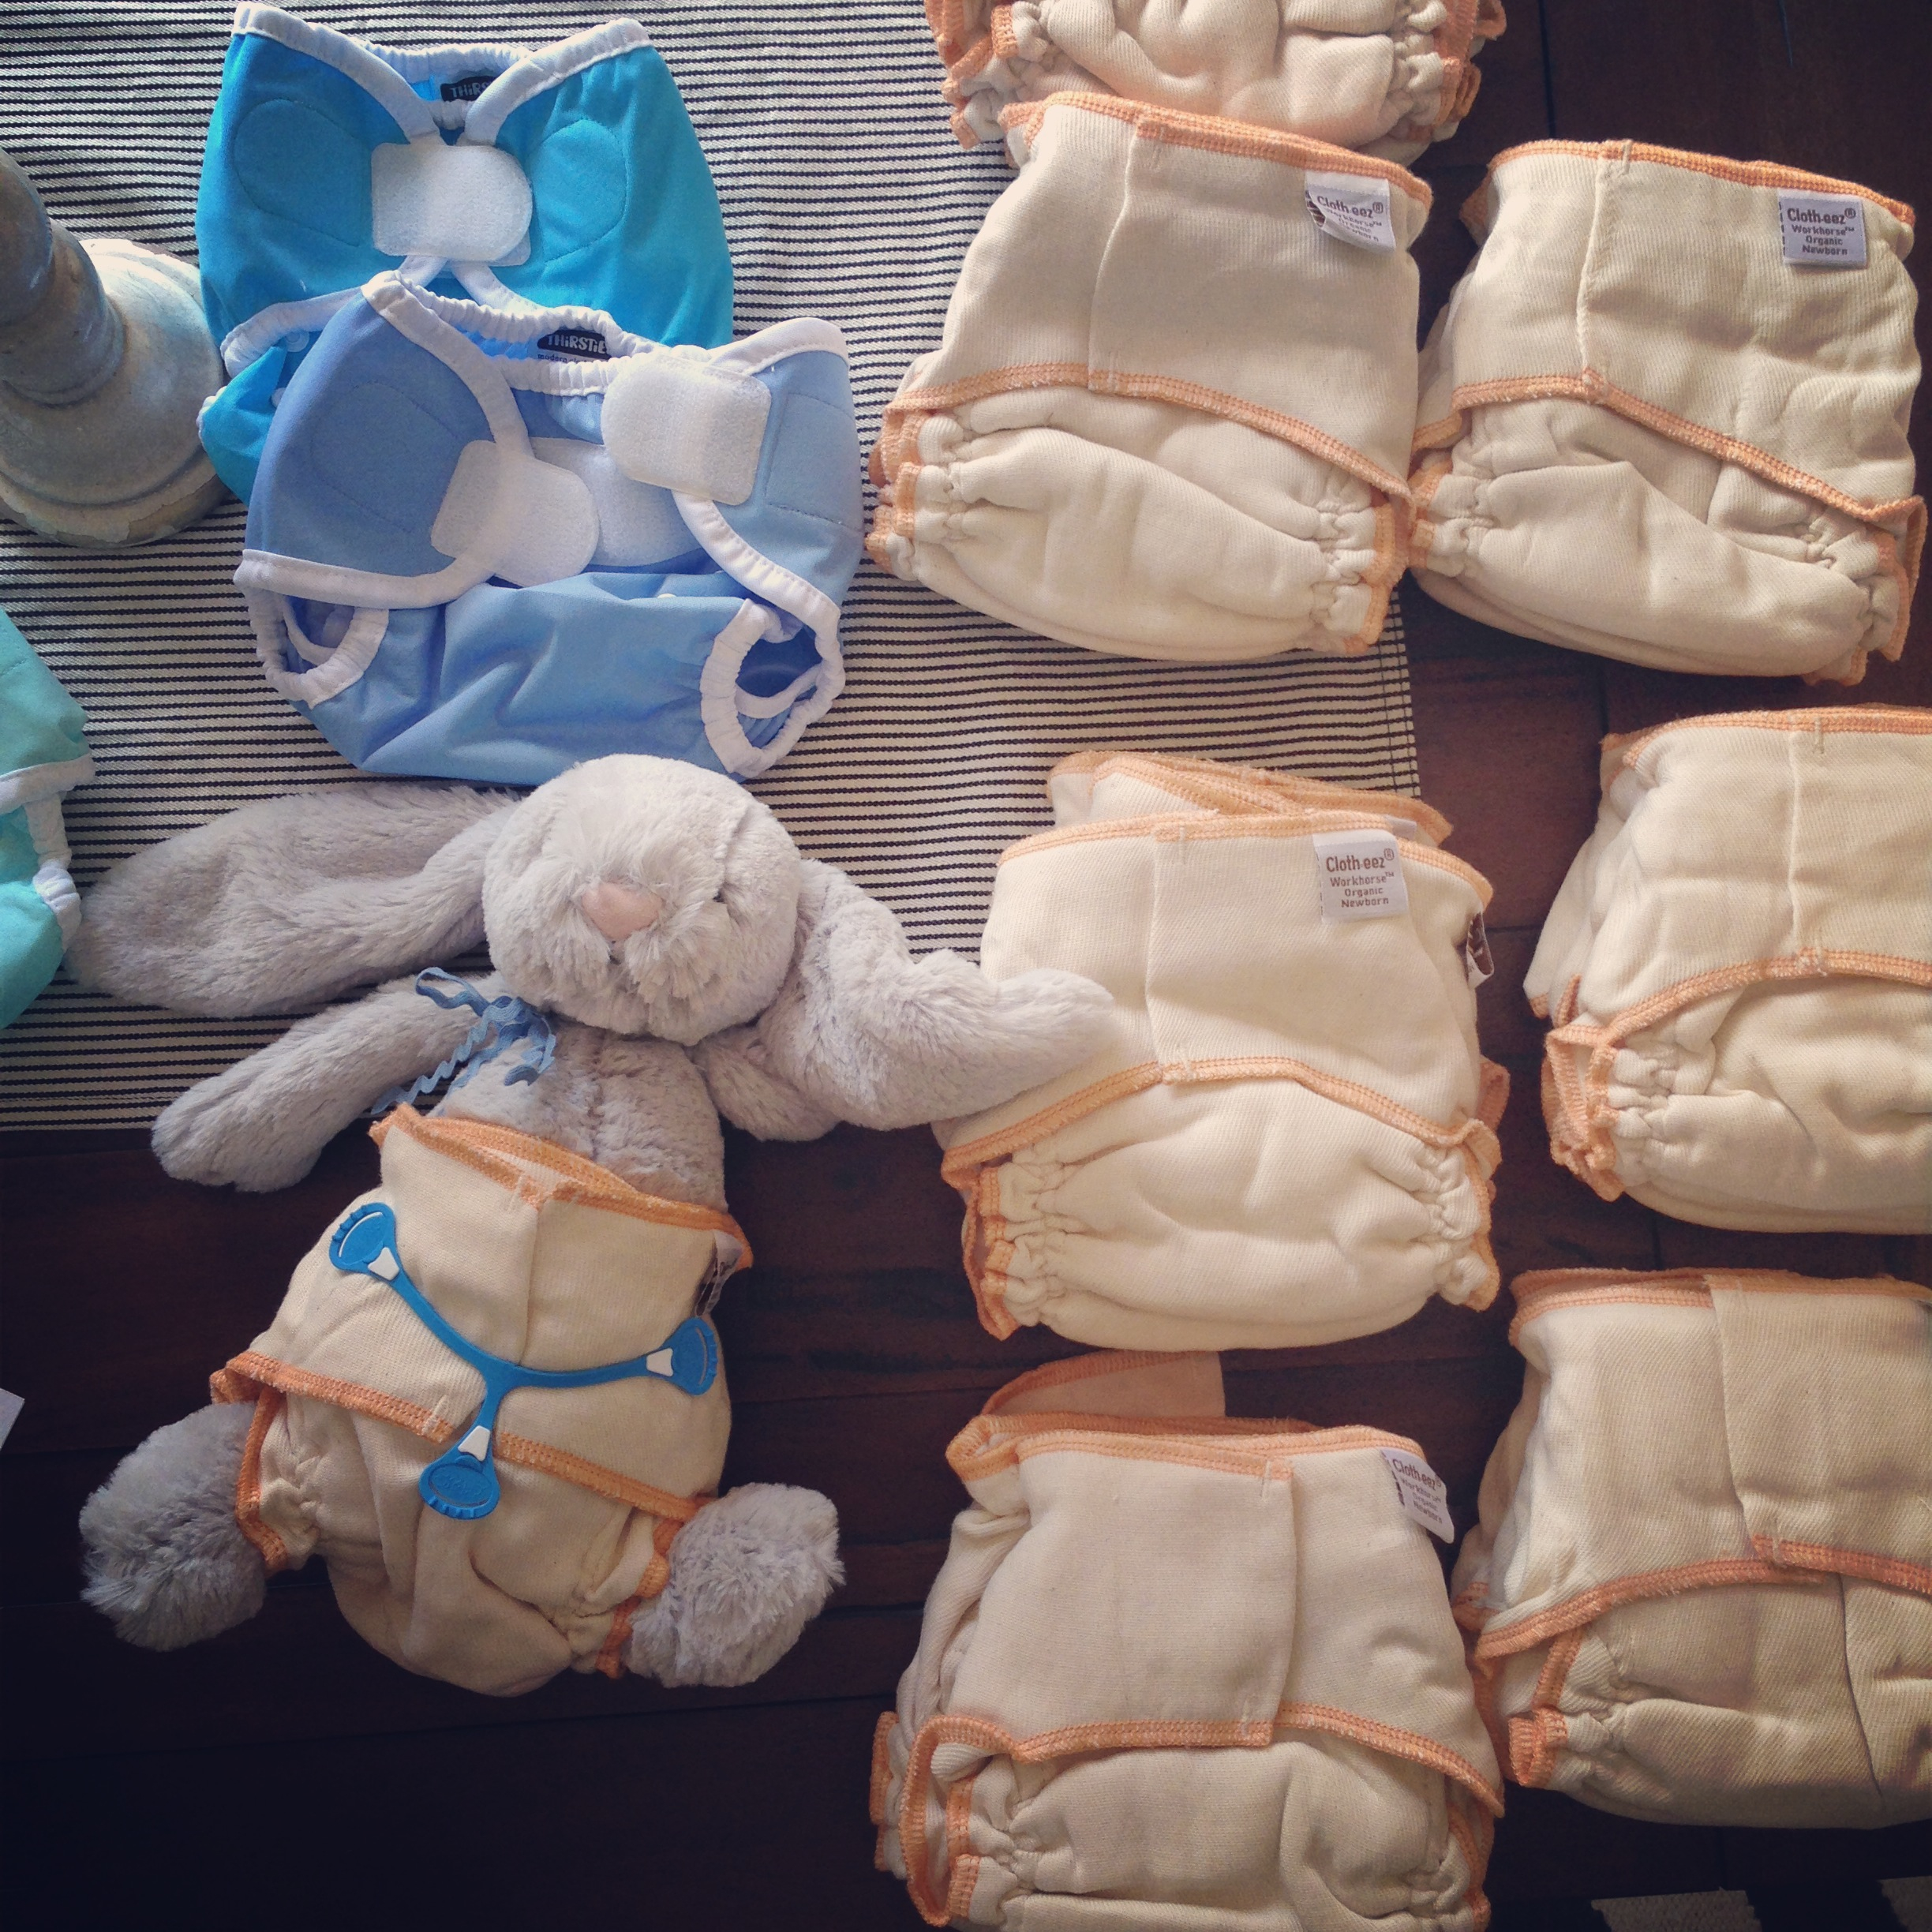 organic newborn diapers